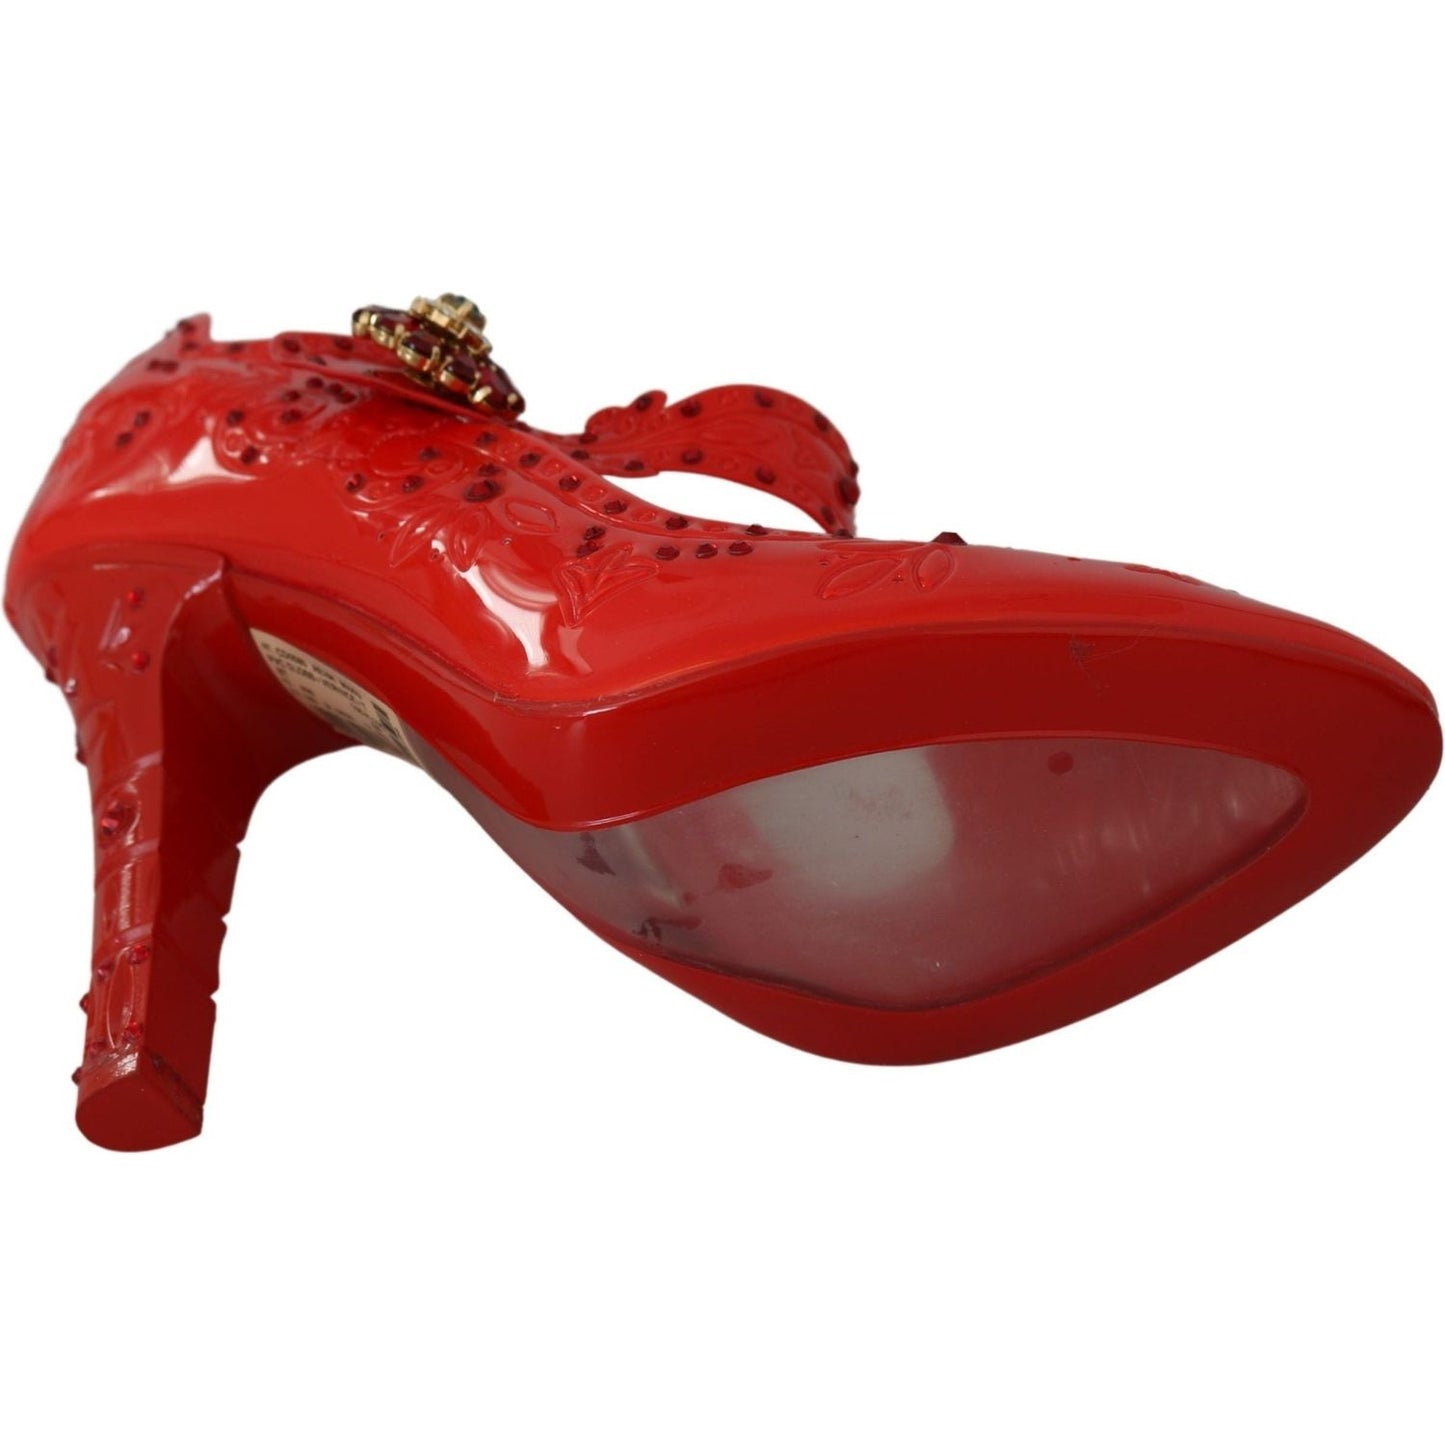 Dolce & Gabbana Chic Red Crystal Cinderella Pumps red-floral-crystal-cinderella-heels-shoes IMG_7996-scaled-6bb16af4-5cd.jpg